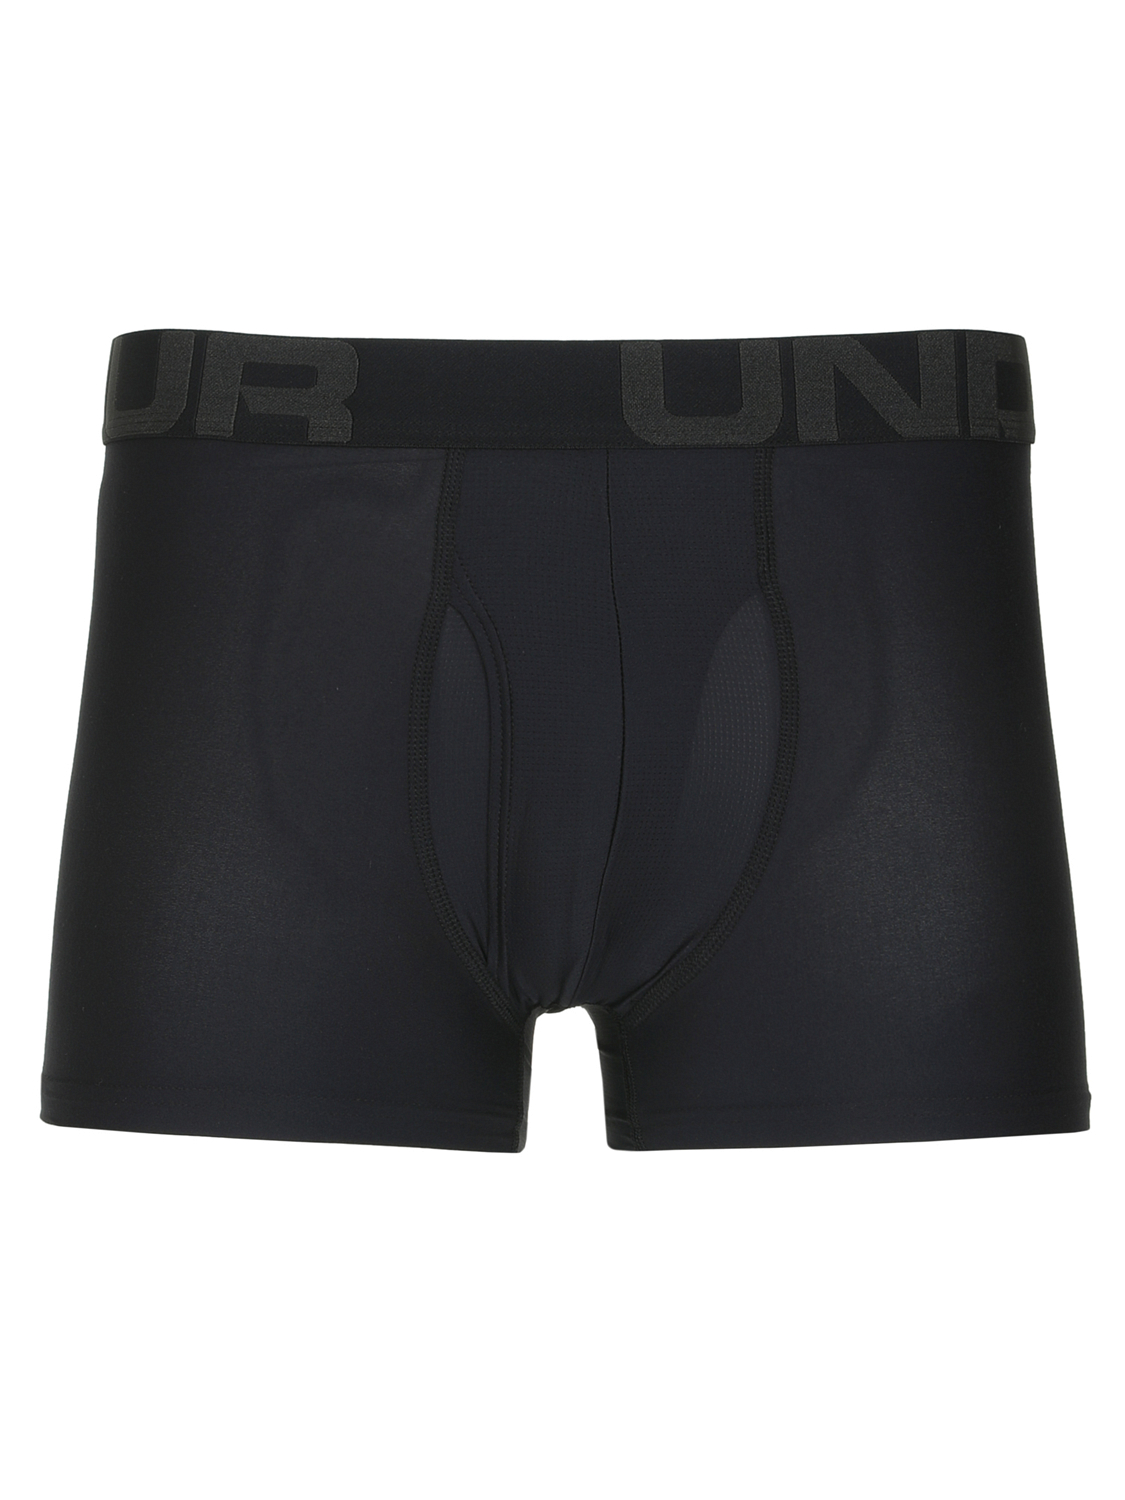 Under Armour Men's UA Tech 3'' Boxerjock 2-Pack Underwear, Mod Grey/Heather  - LG 